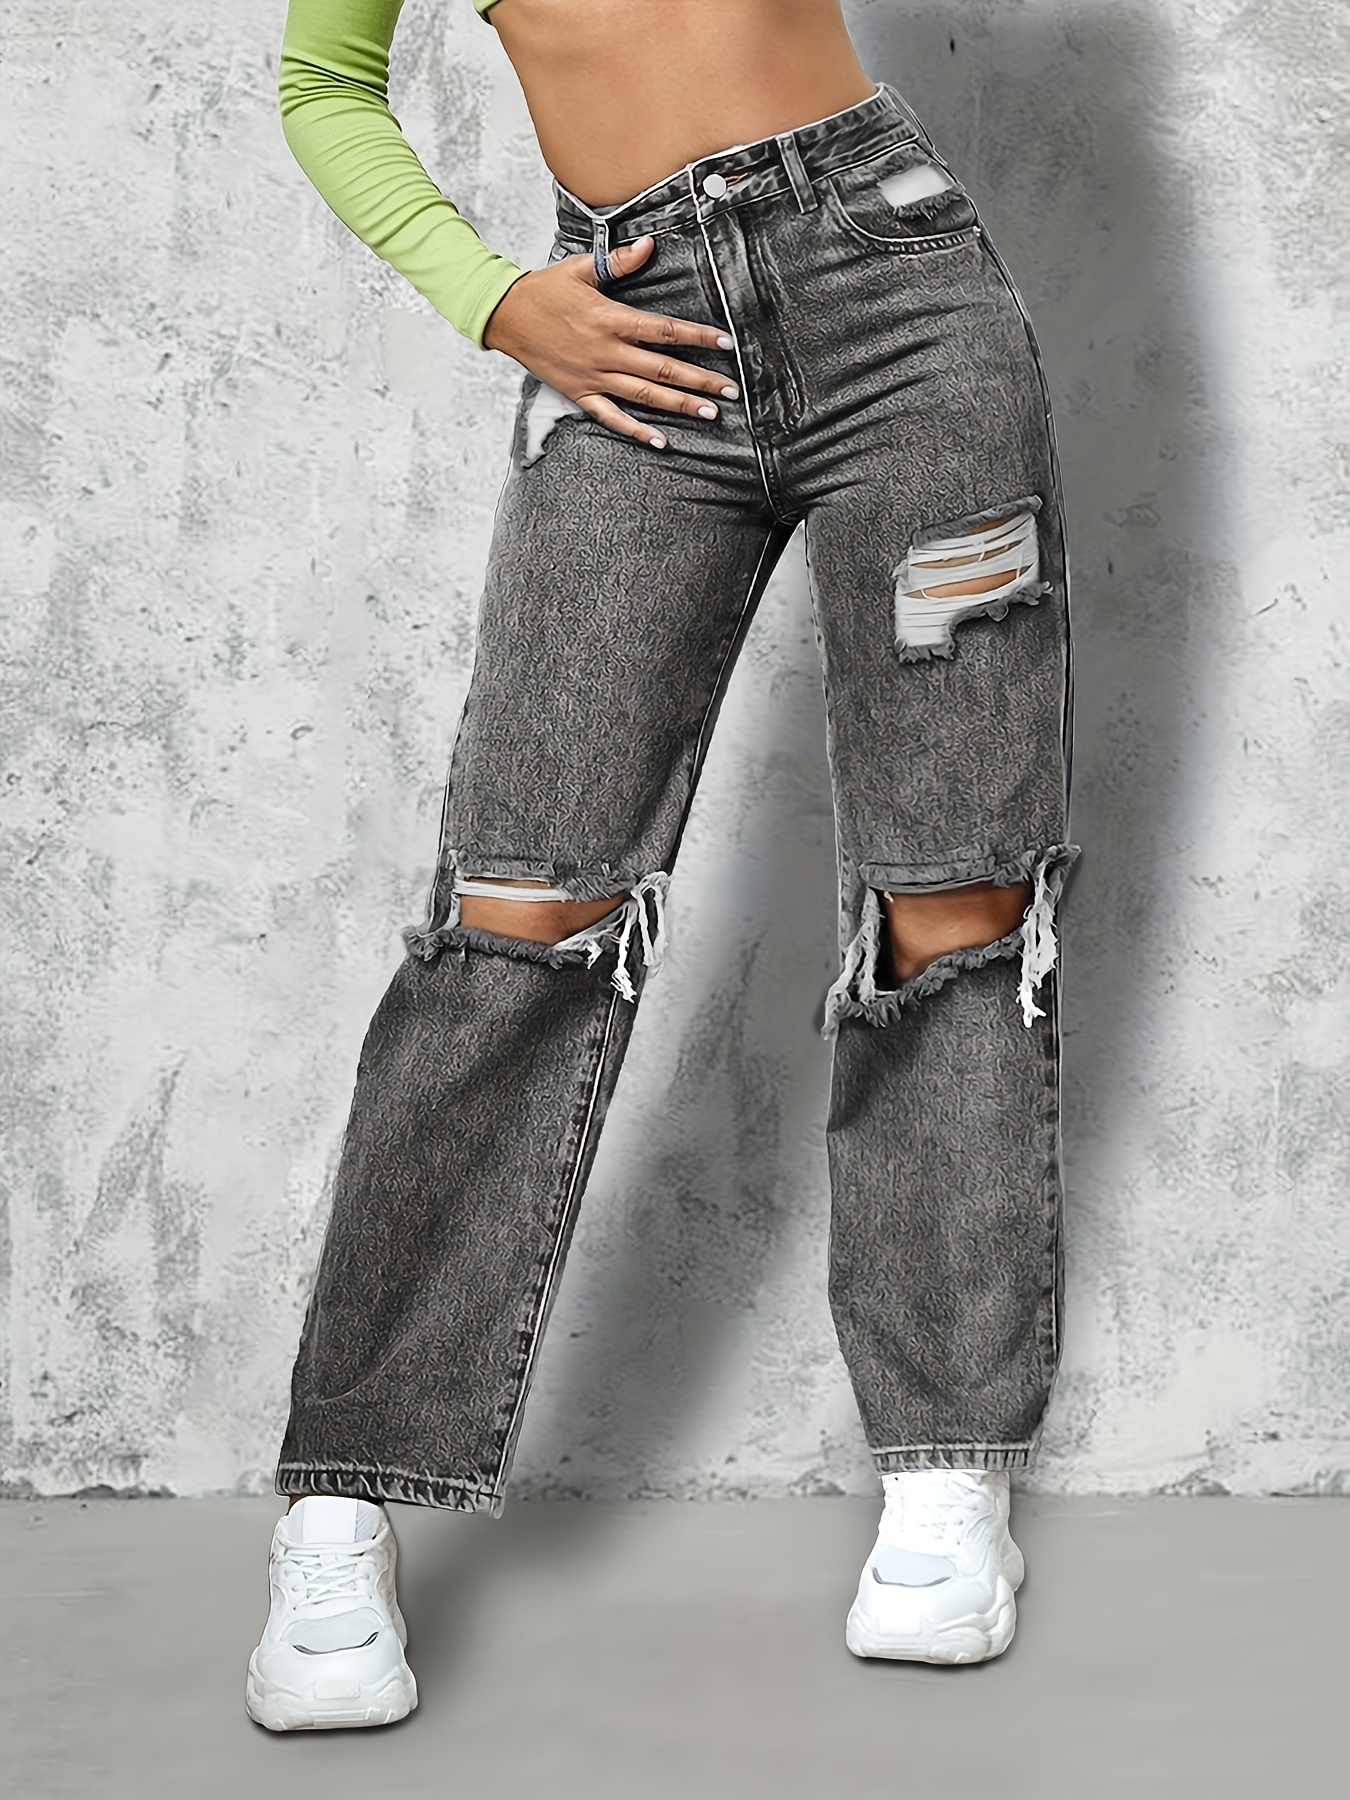 Gibobby Jeans Pantalones de mujer Pantalones vaqueros clásicos para mujer,  informales, ajustados, de cintura alta, color gris , pantalones(Gris  oscuro,CH)